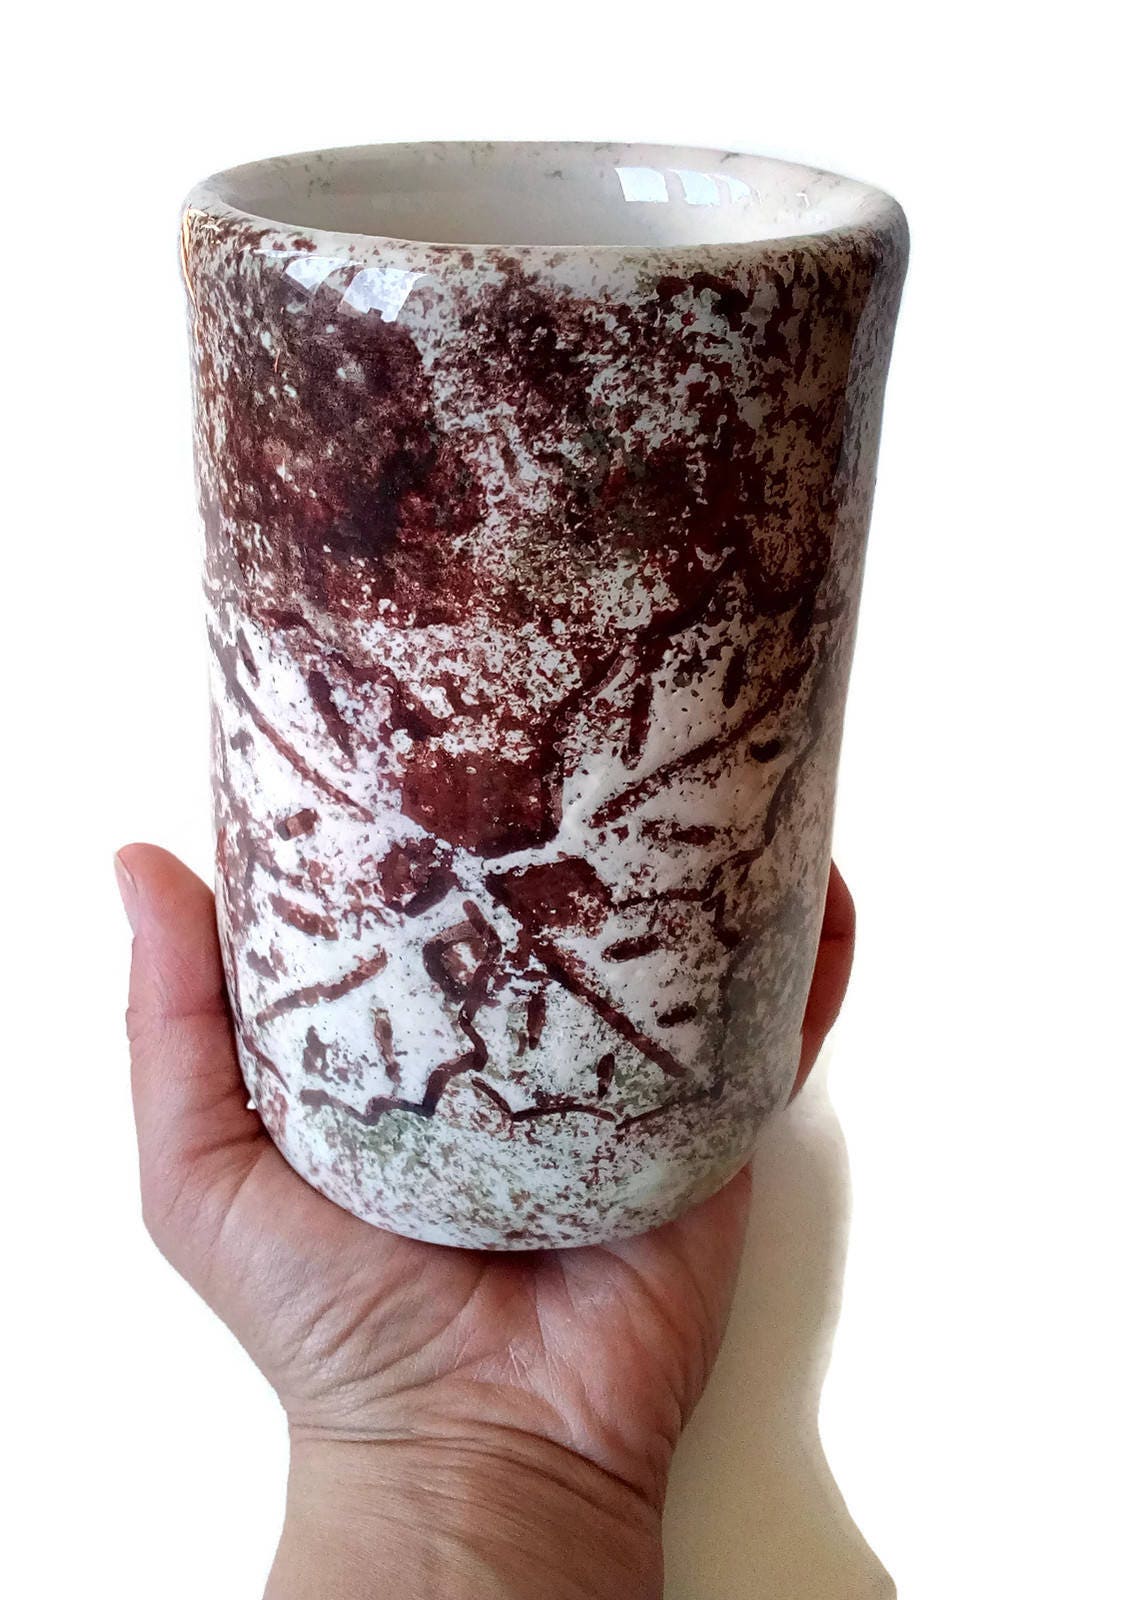 Large Utensil Holder For Kitchen Organization, Housewarming Gift First Home Trending Now, Handmade Ceramic Vase, Mom Birthday Gift - Ceramica Ana Rafael